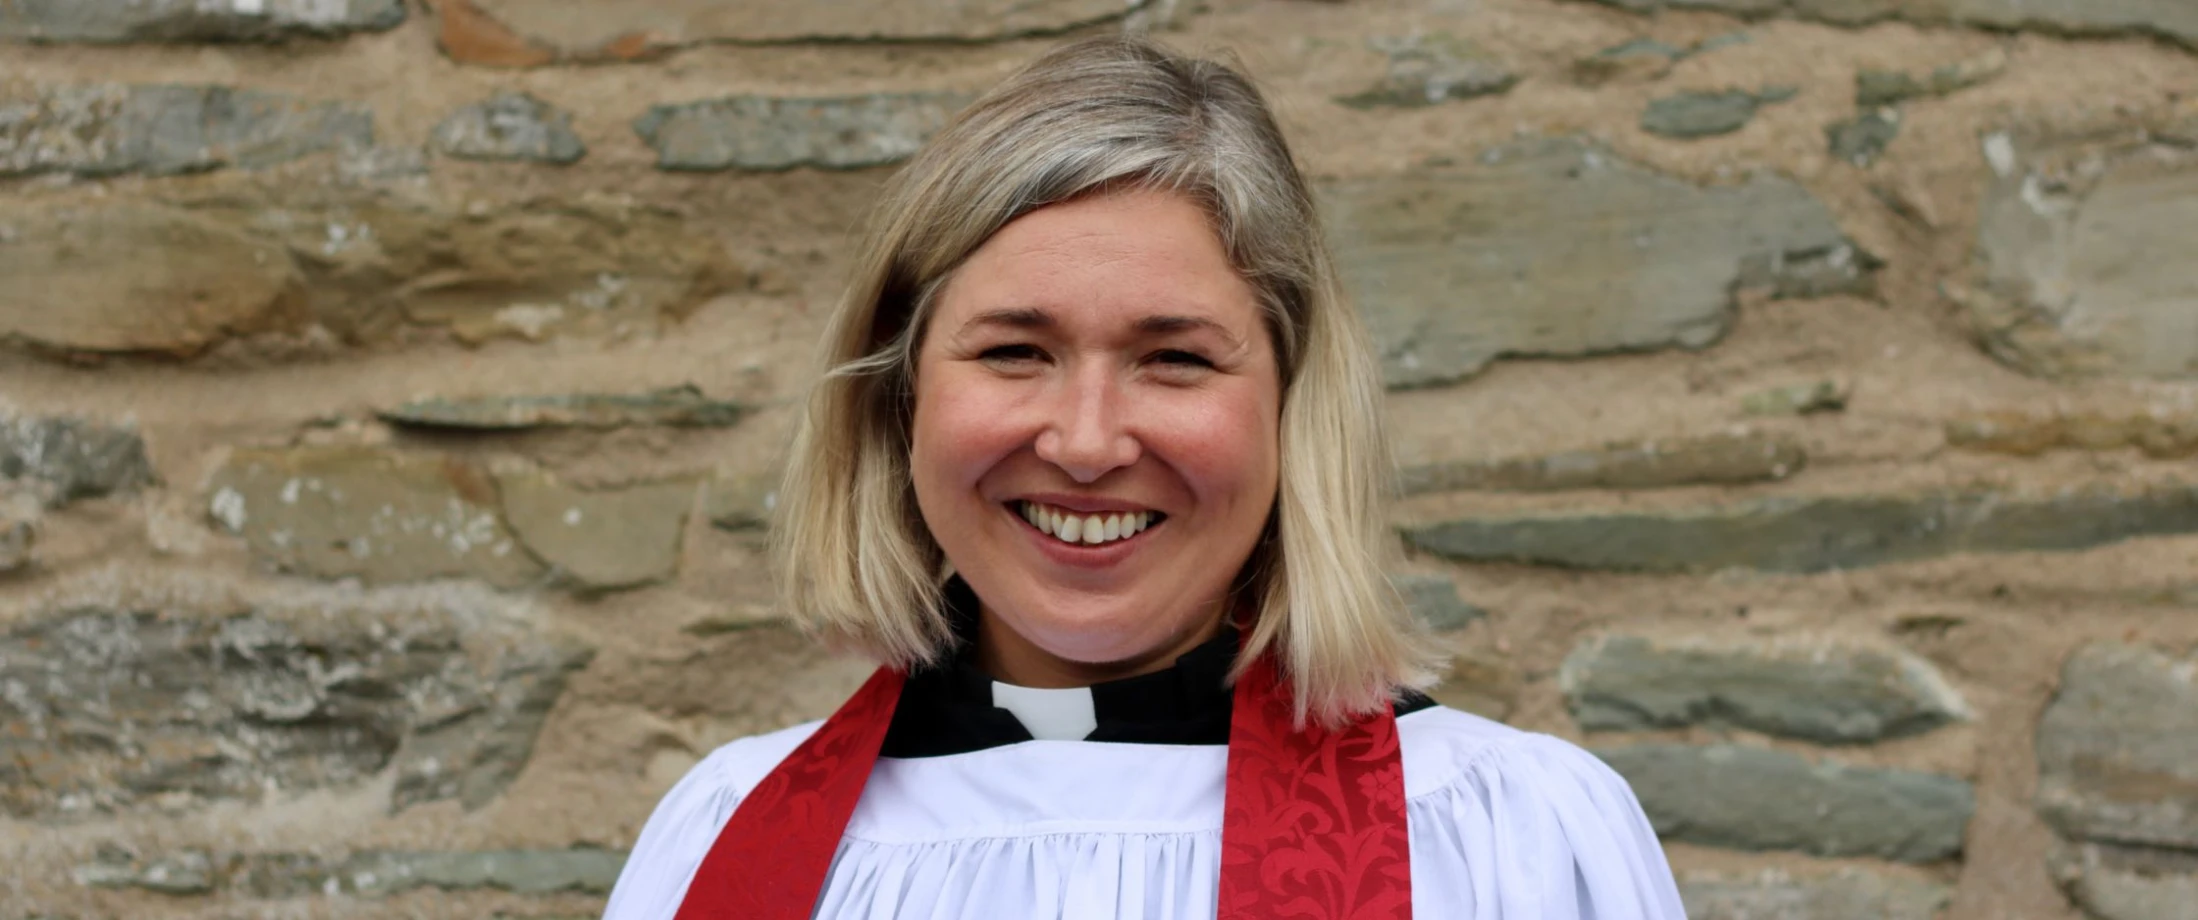 Revd Sabrina Cooke is ordained presbyter